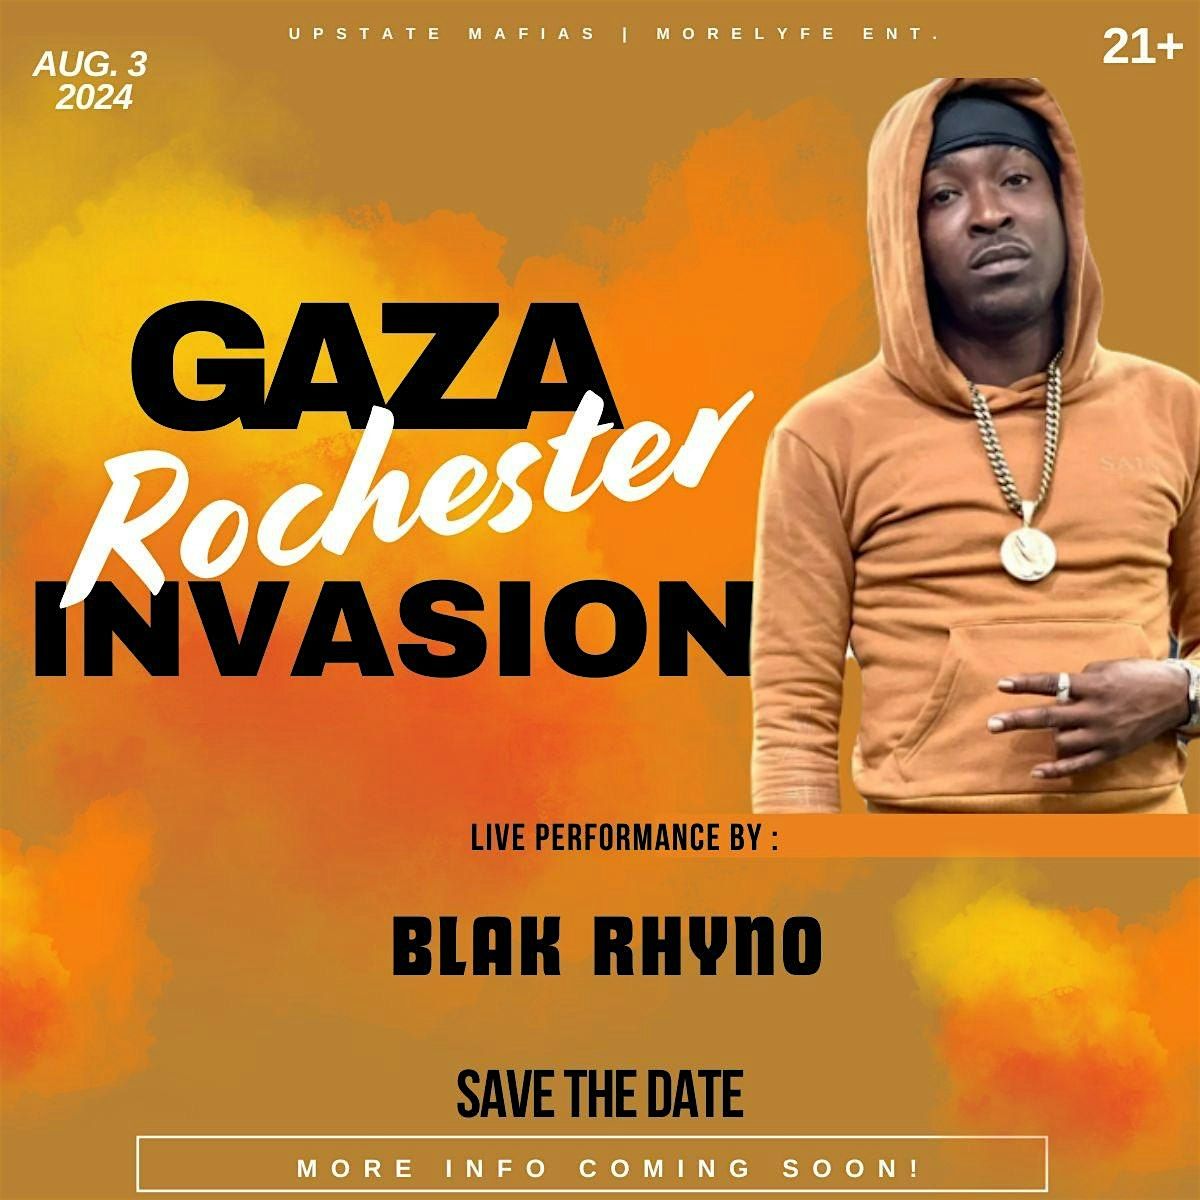 Rochester Gaza invasion